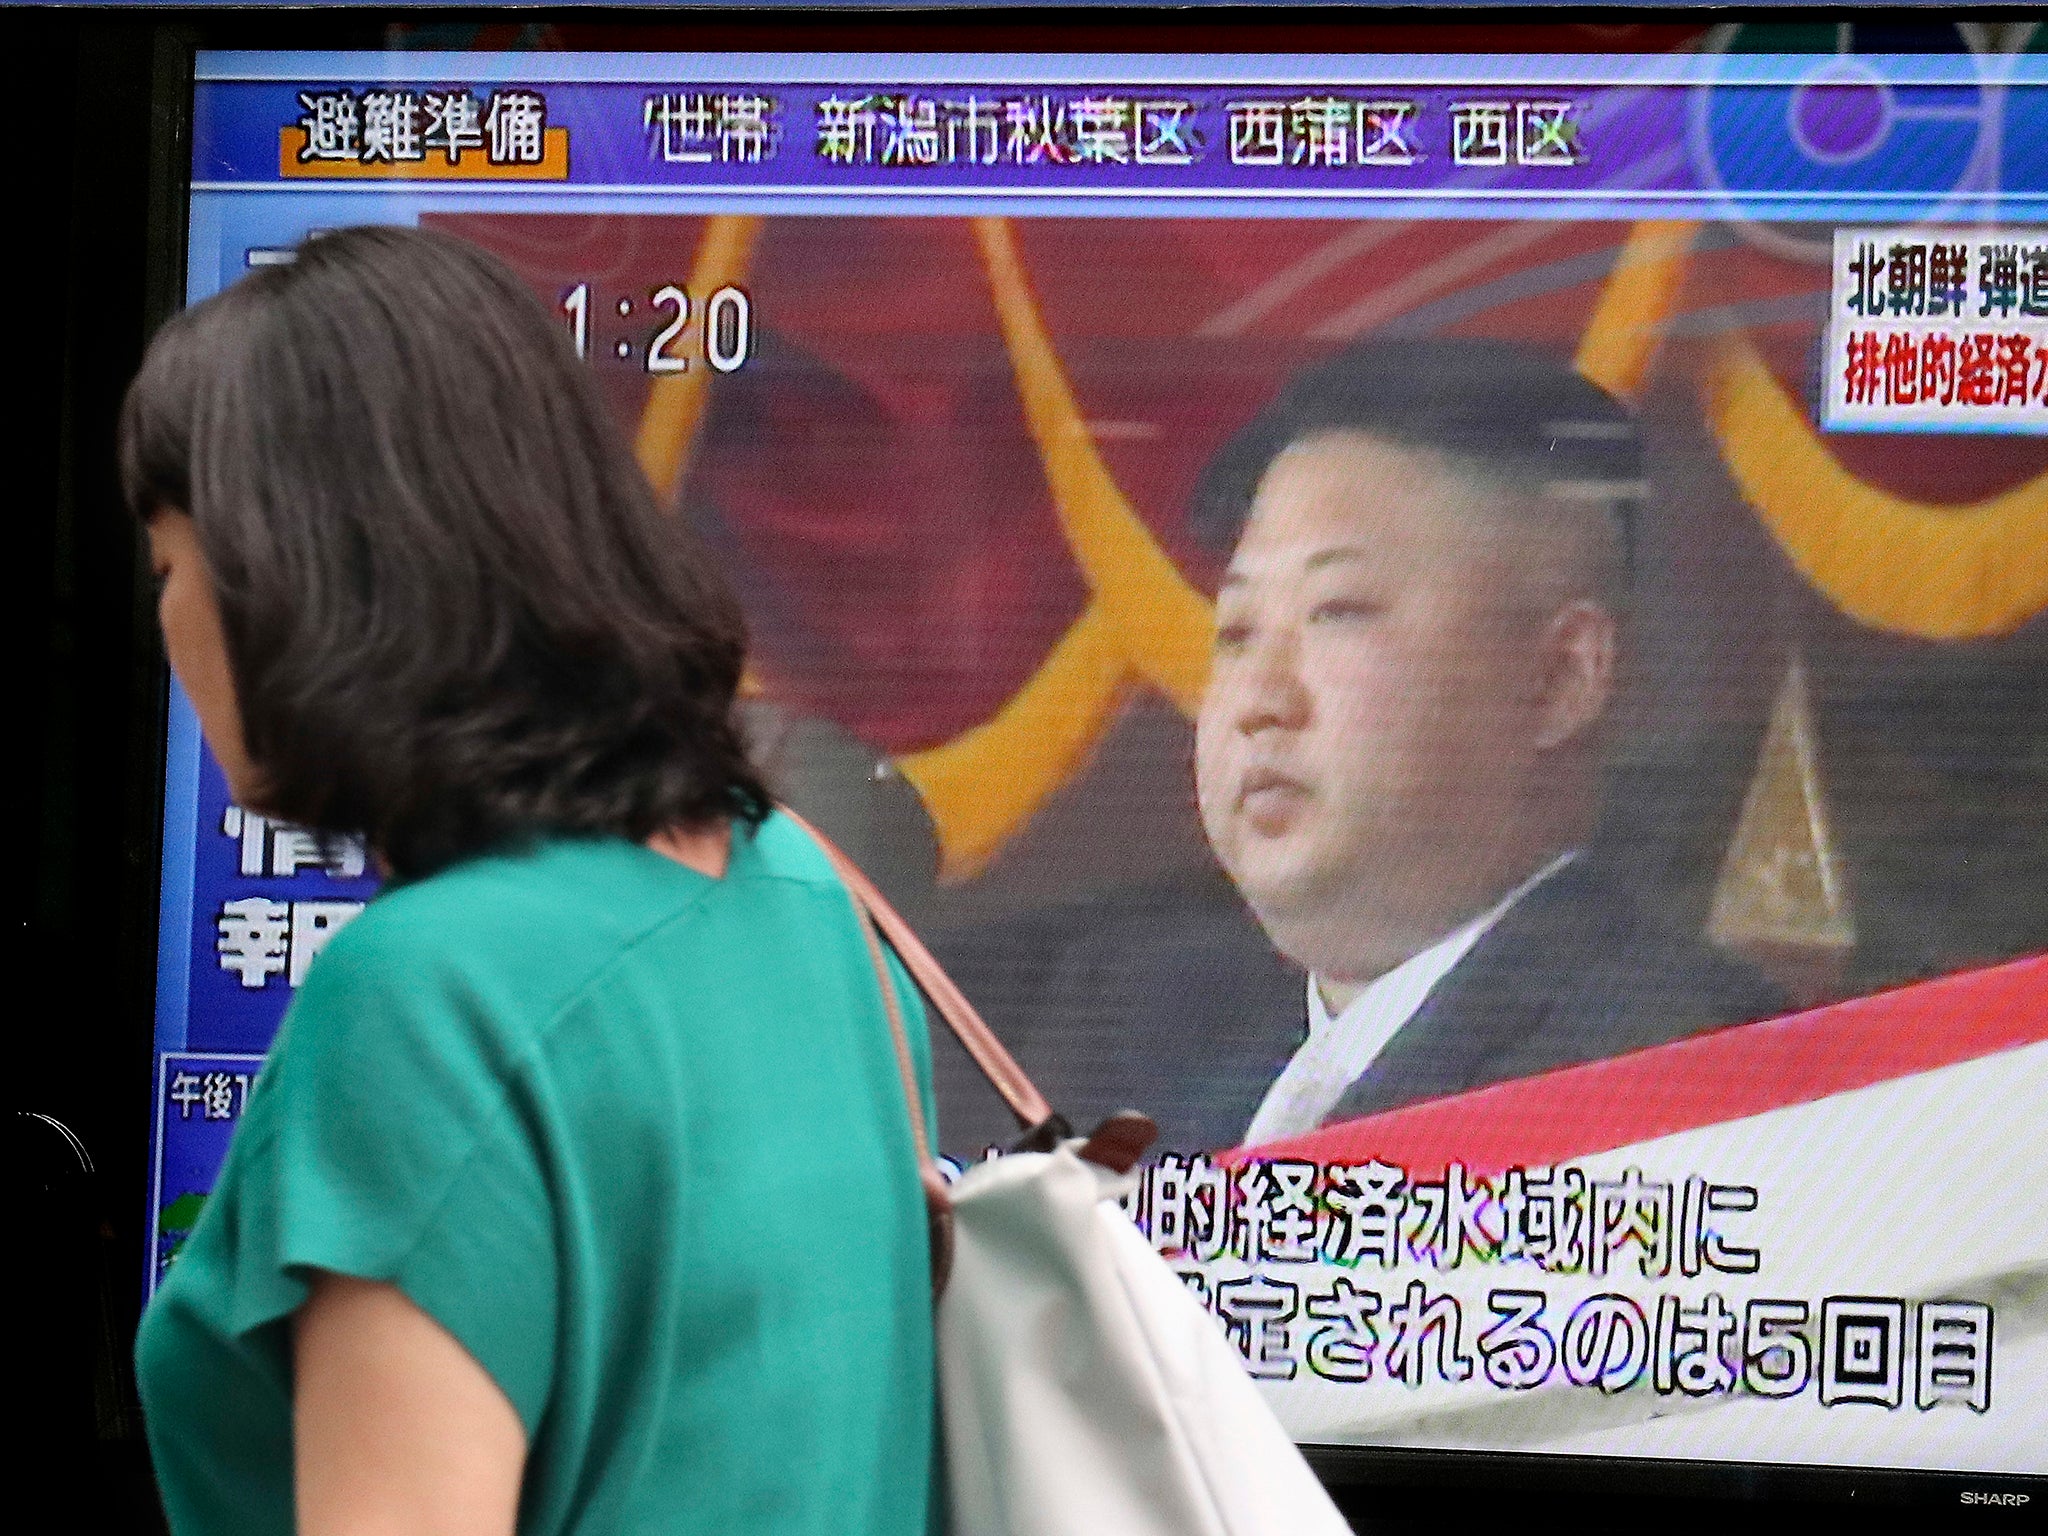 North Korea announced a successful intercontinental missile launch